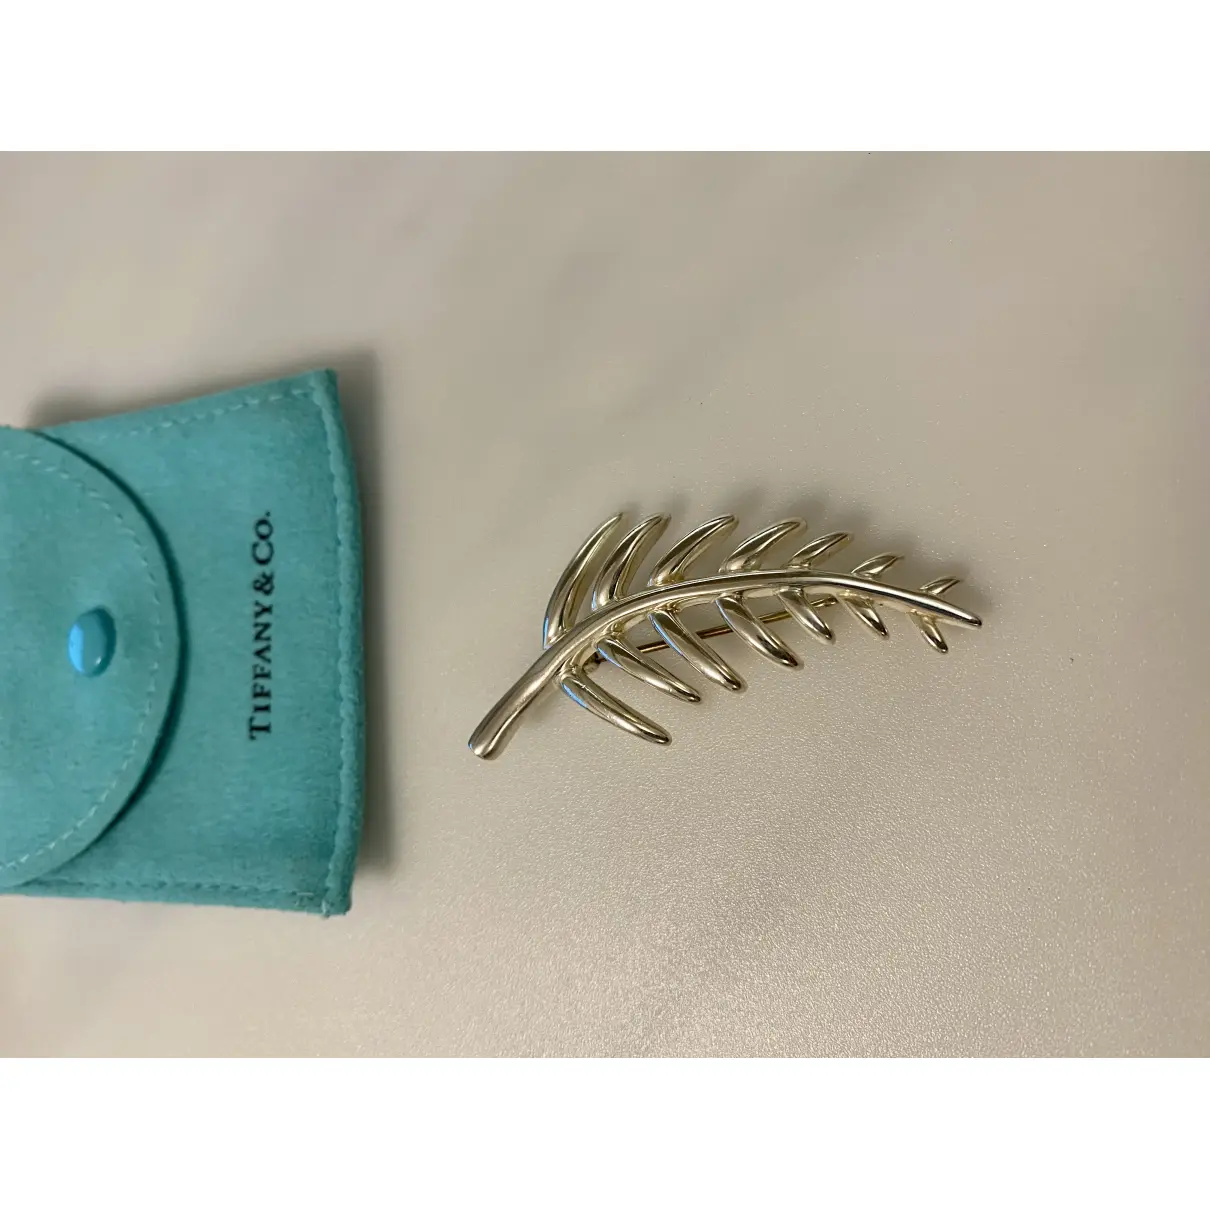 Buy Tiffany & Co Elsa Peretti silver pin & brooche online